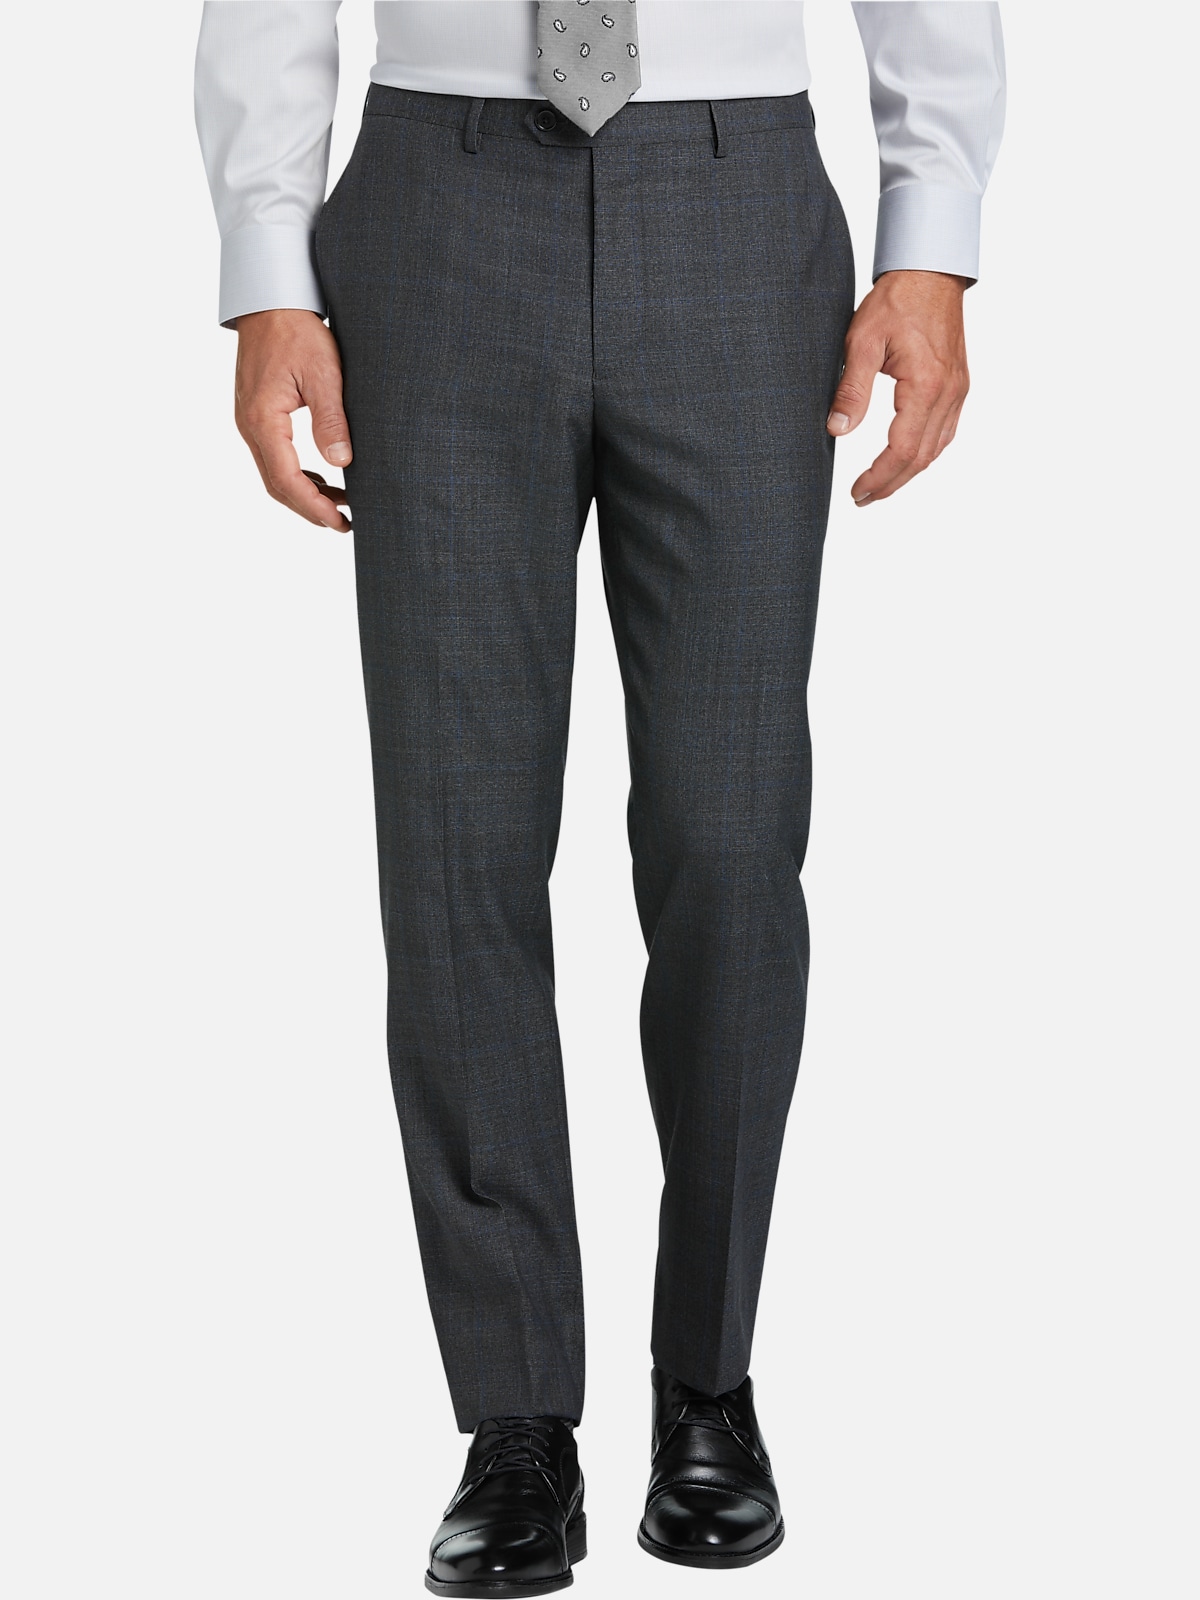 Lauren By Ralph Lauren Classic Fit Suit | All Clothing| Men's Wearhouse